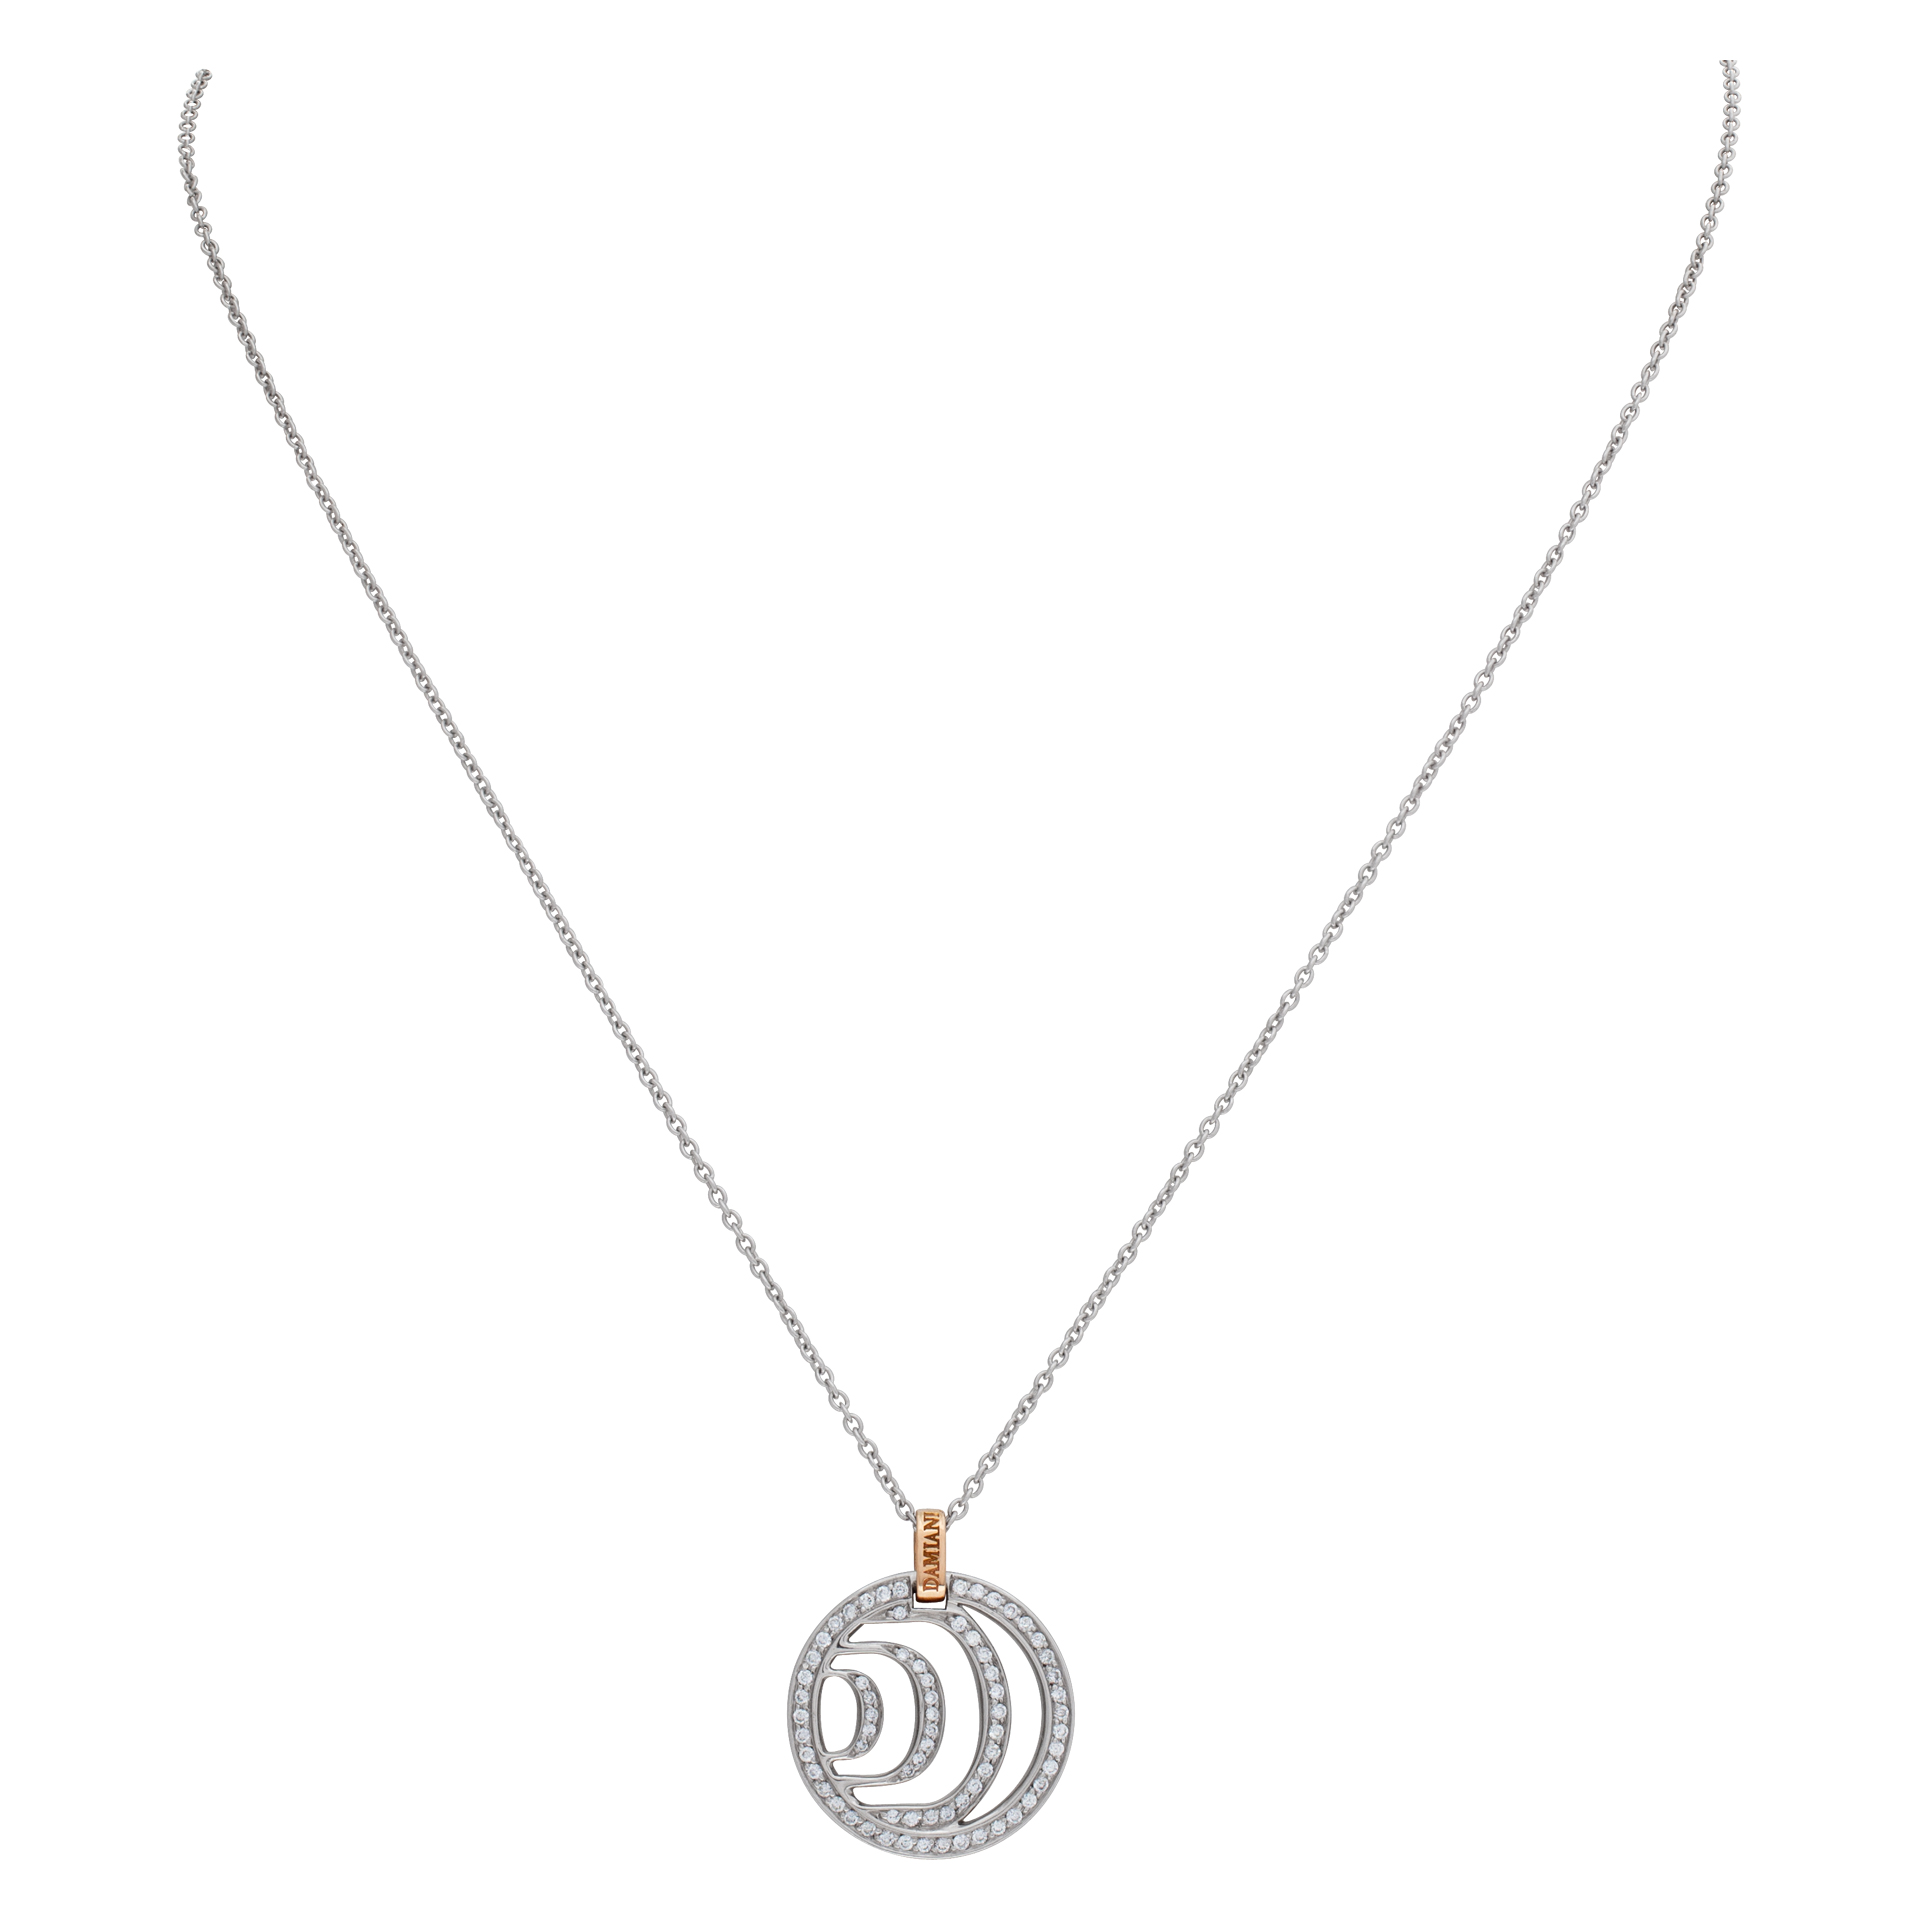 Damiani "Damianissima" diamond necklace 18k white & pink gold